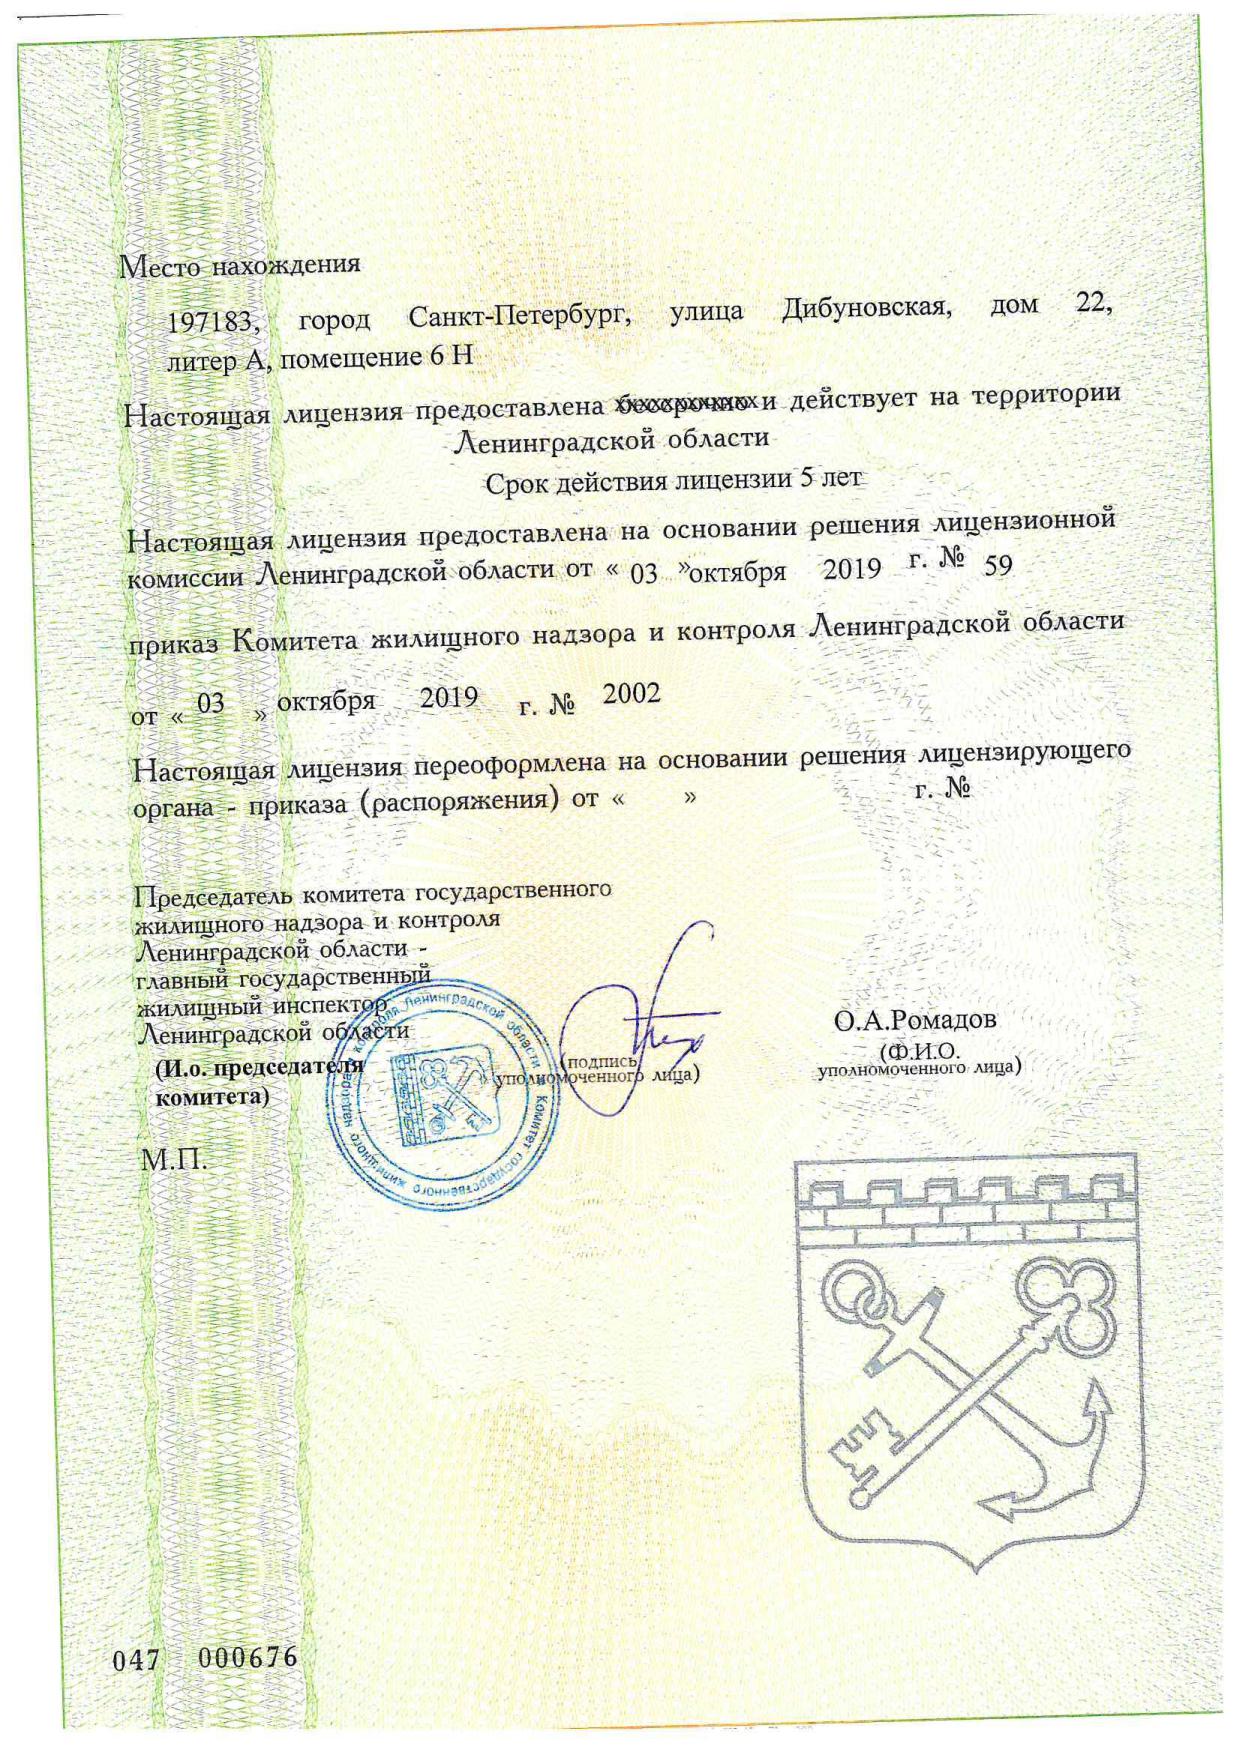 Лицензия на управление МКД №№ 551 от 03.10.2019